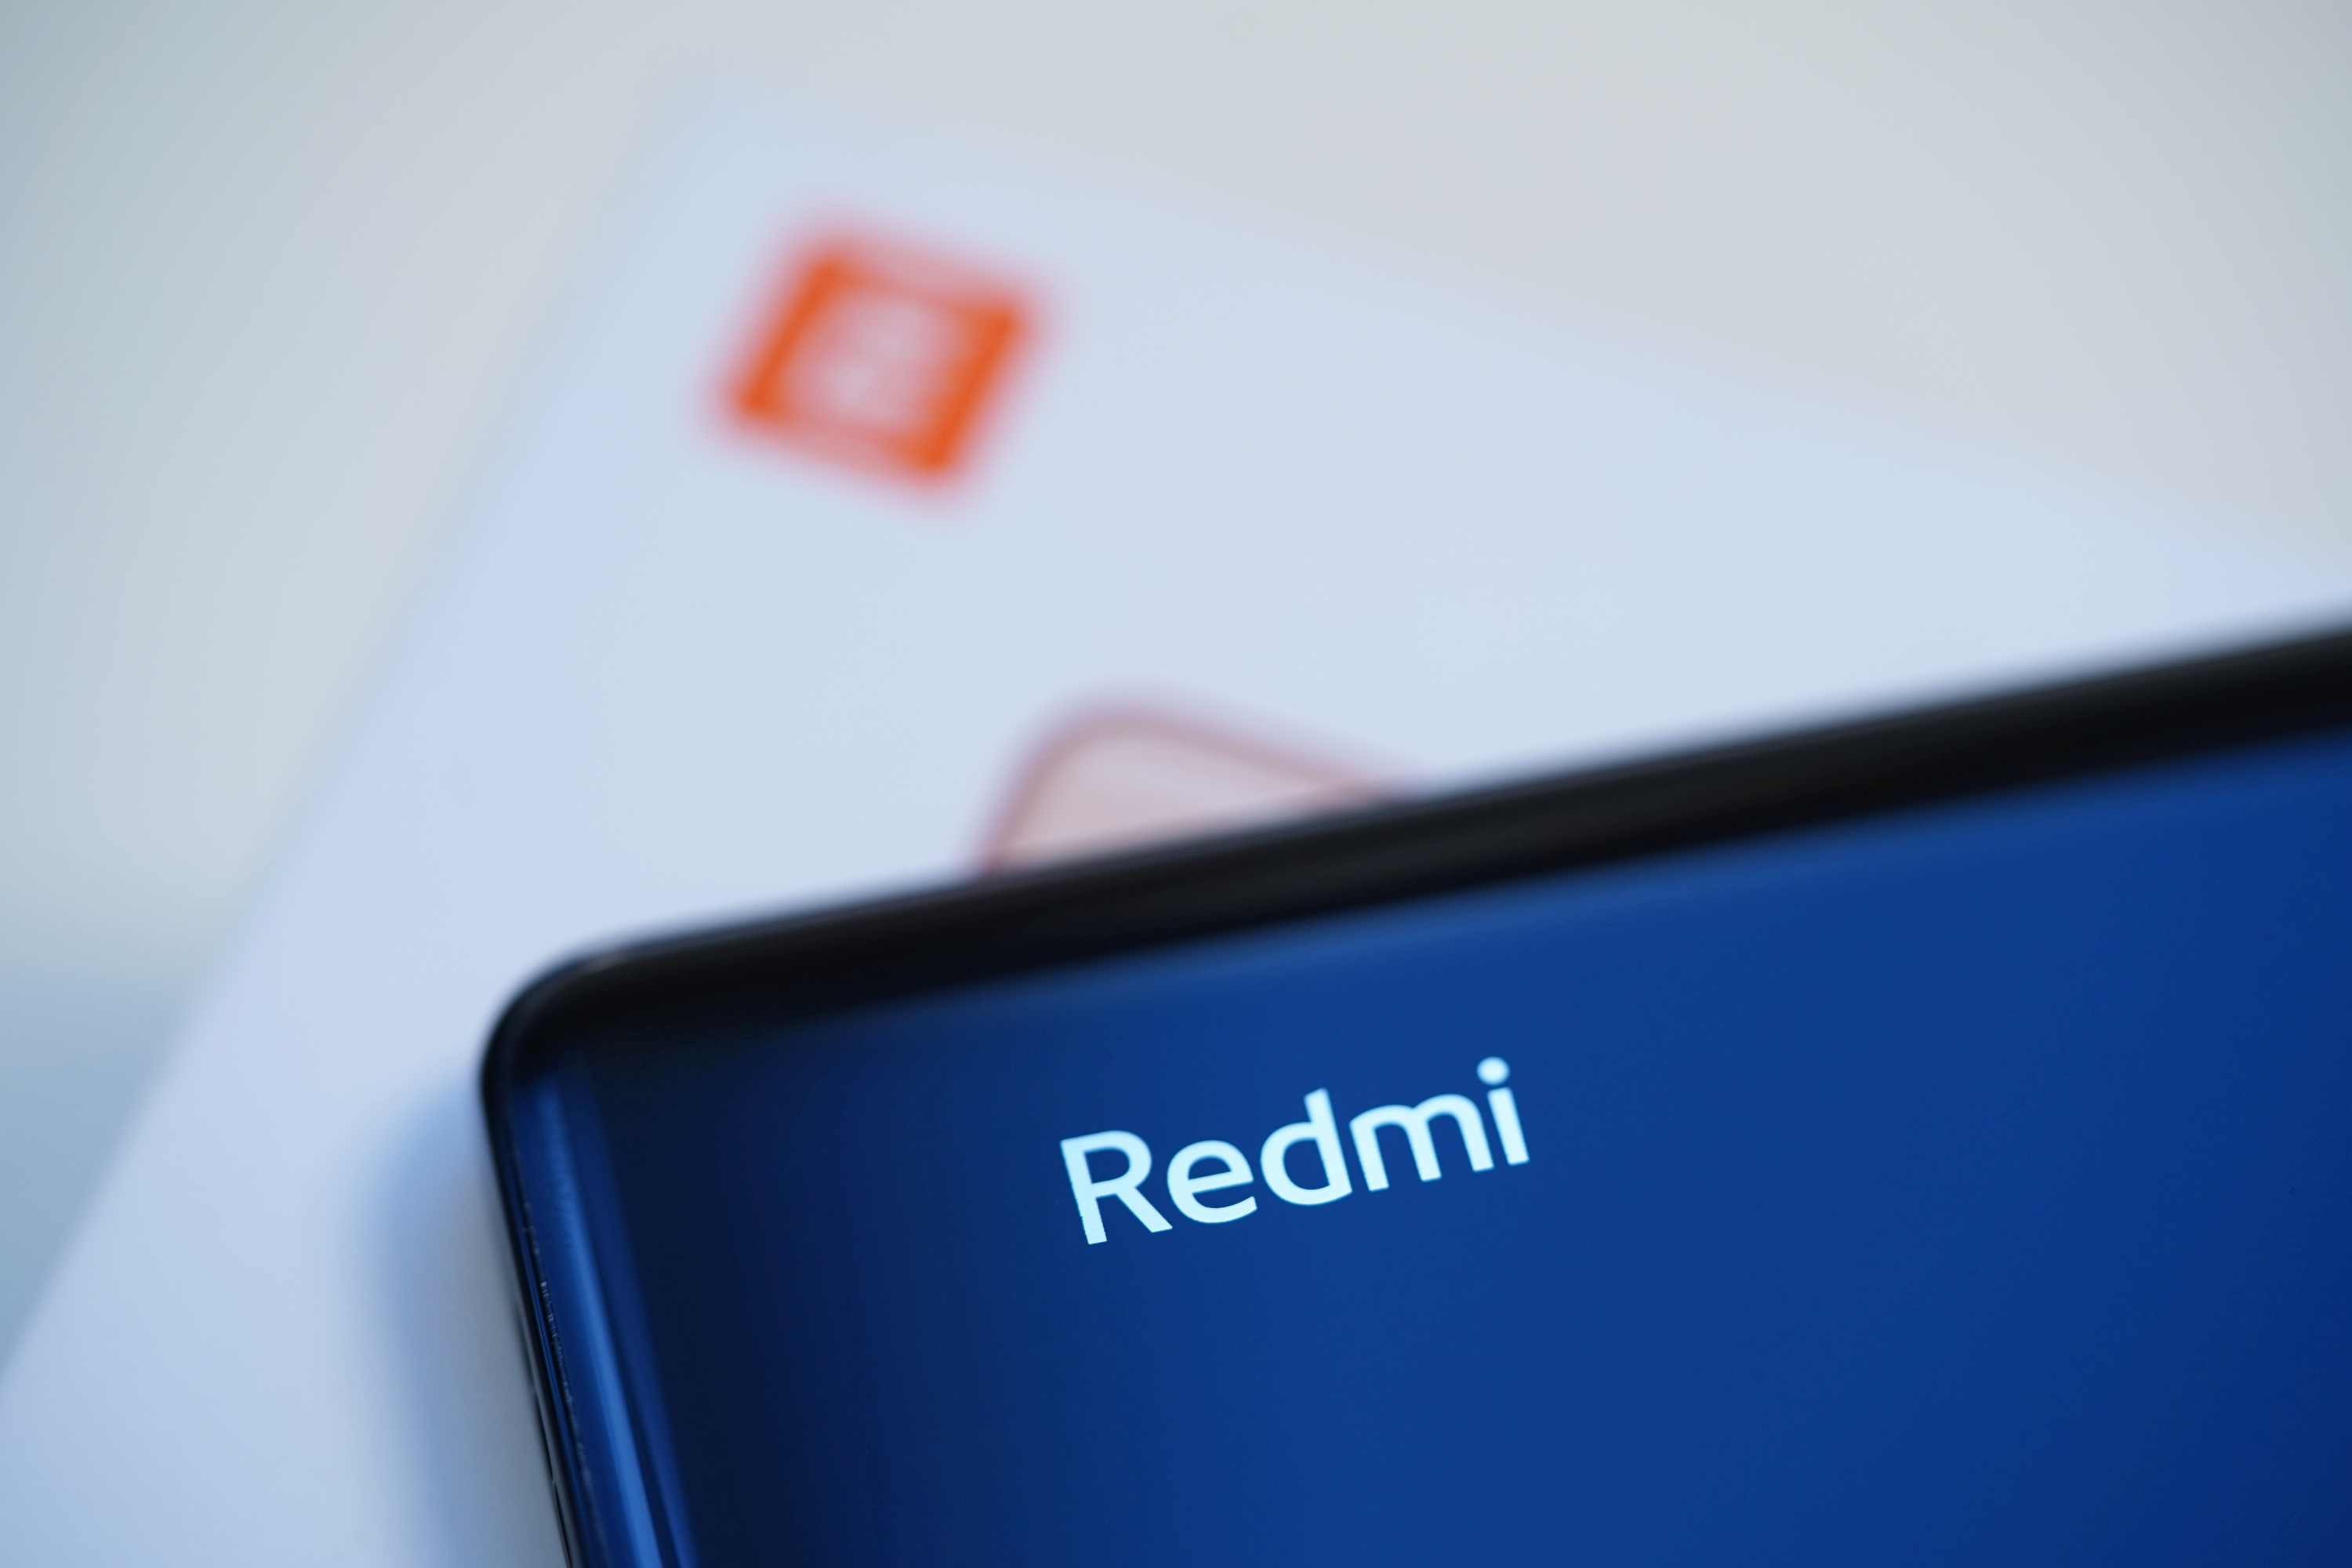 Xiaomi Redmi logo